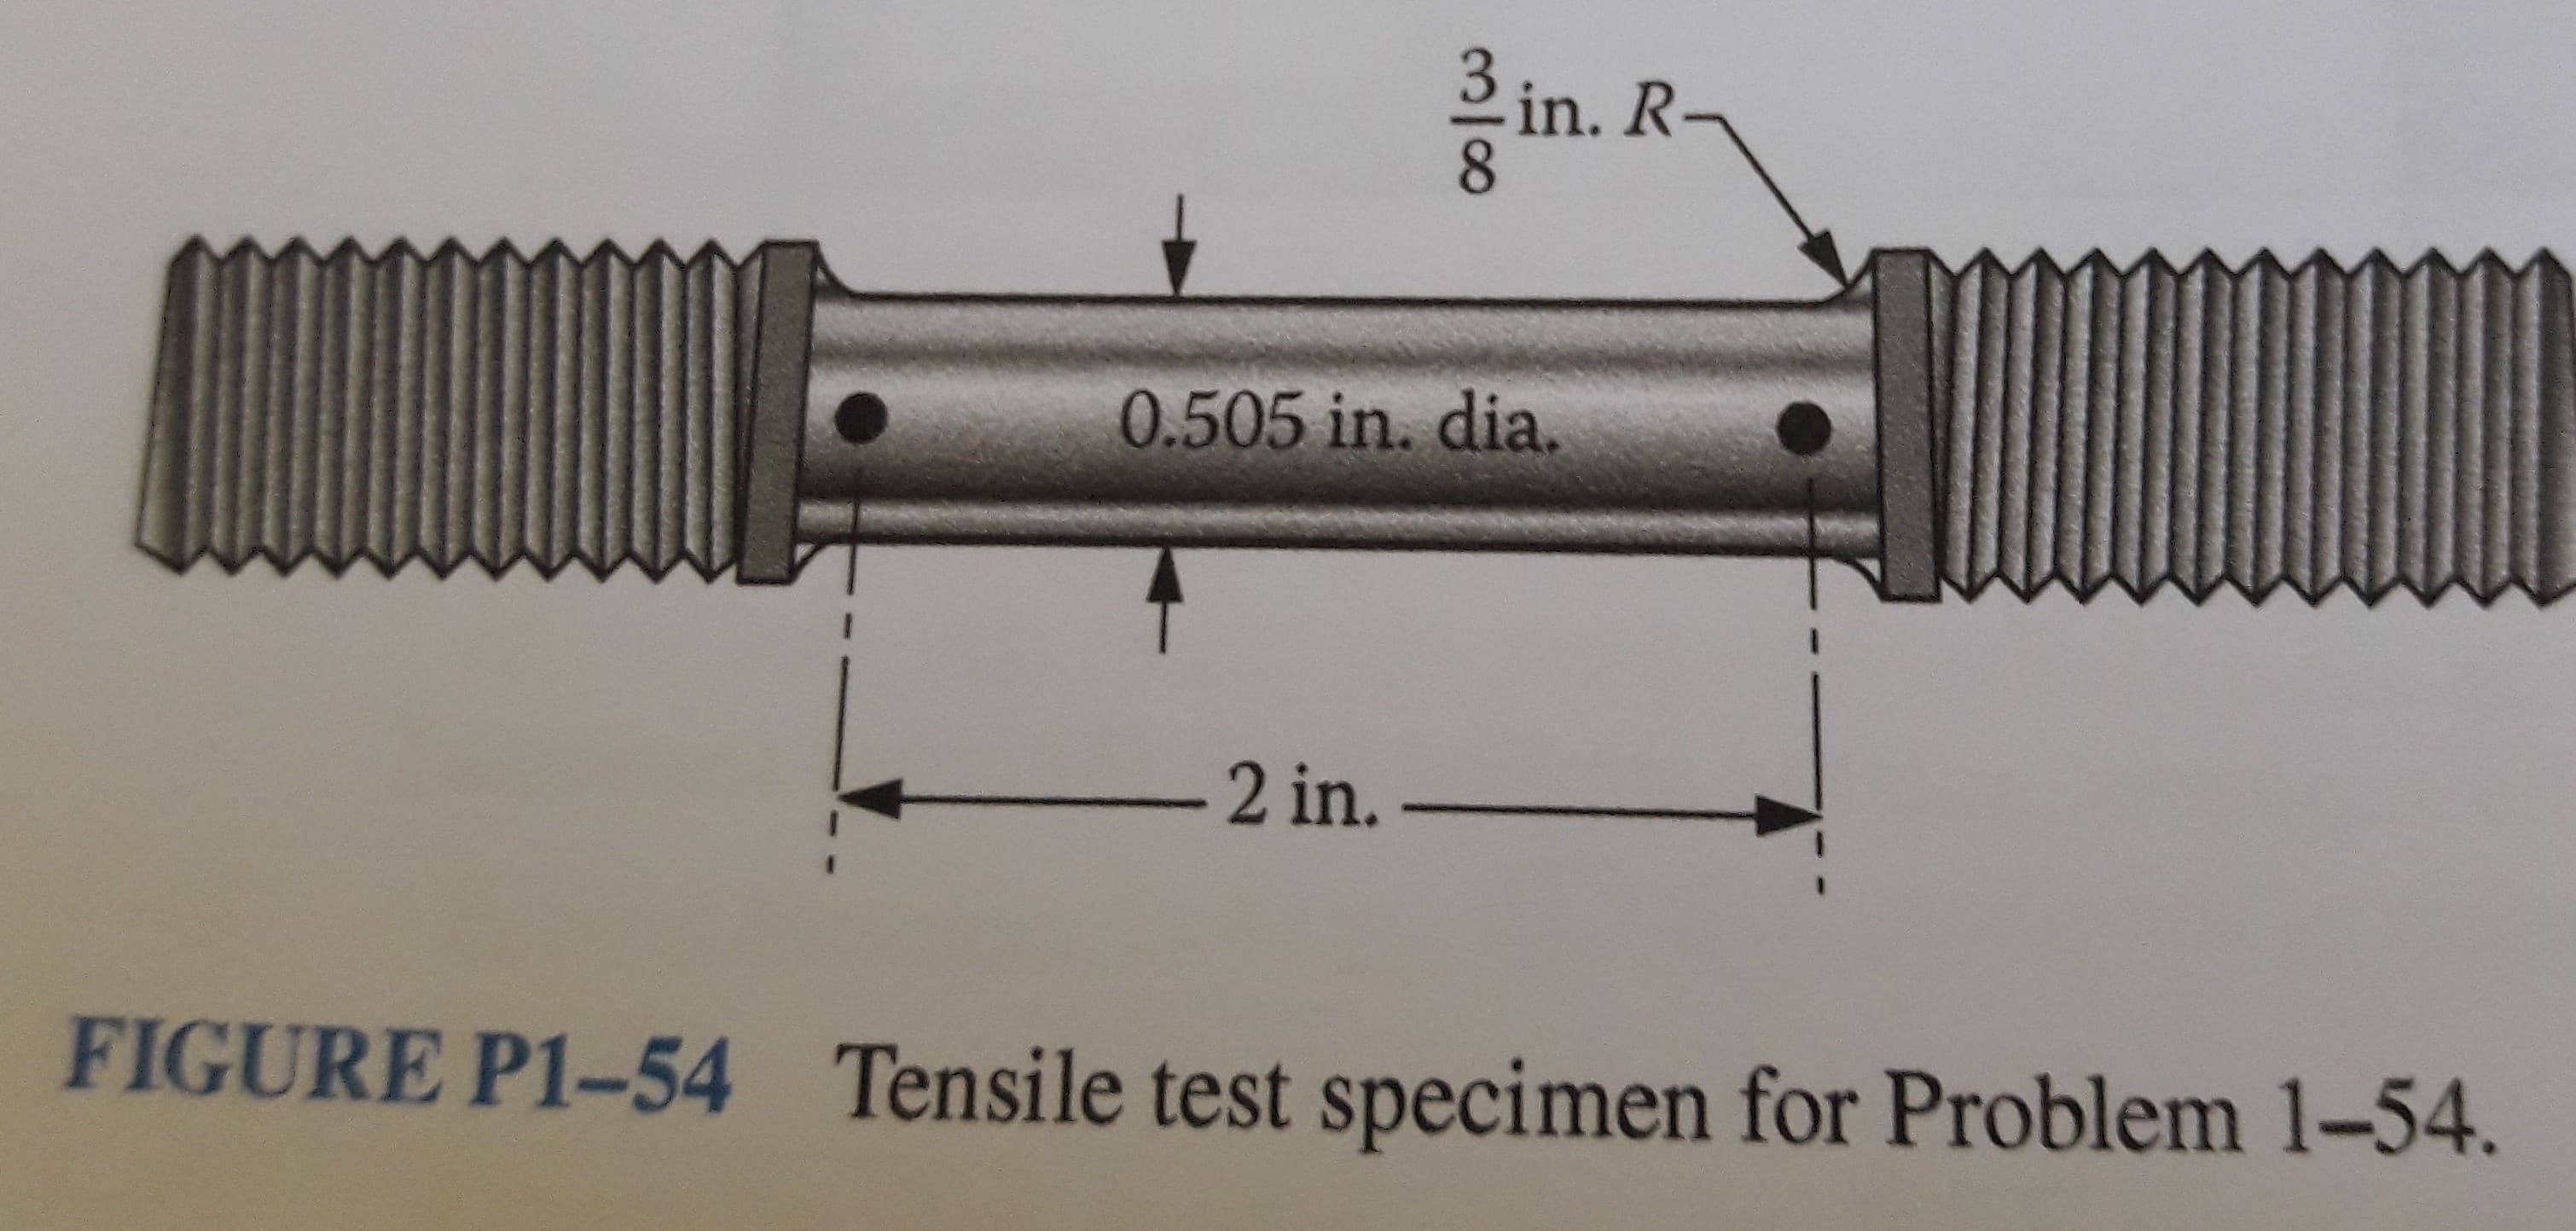 in. R
0.505 in. dia.
2 in.
FIGURE P1-54
Tensile test specimen for Problem 1-54.
3/8
